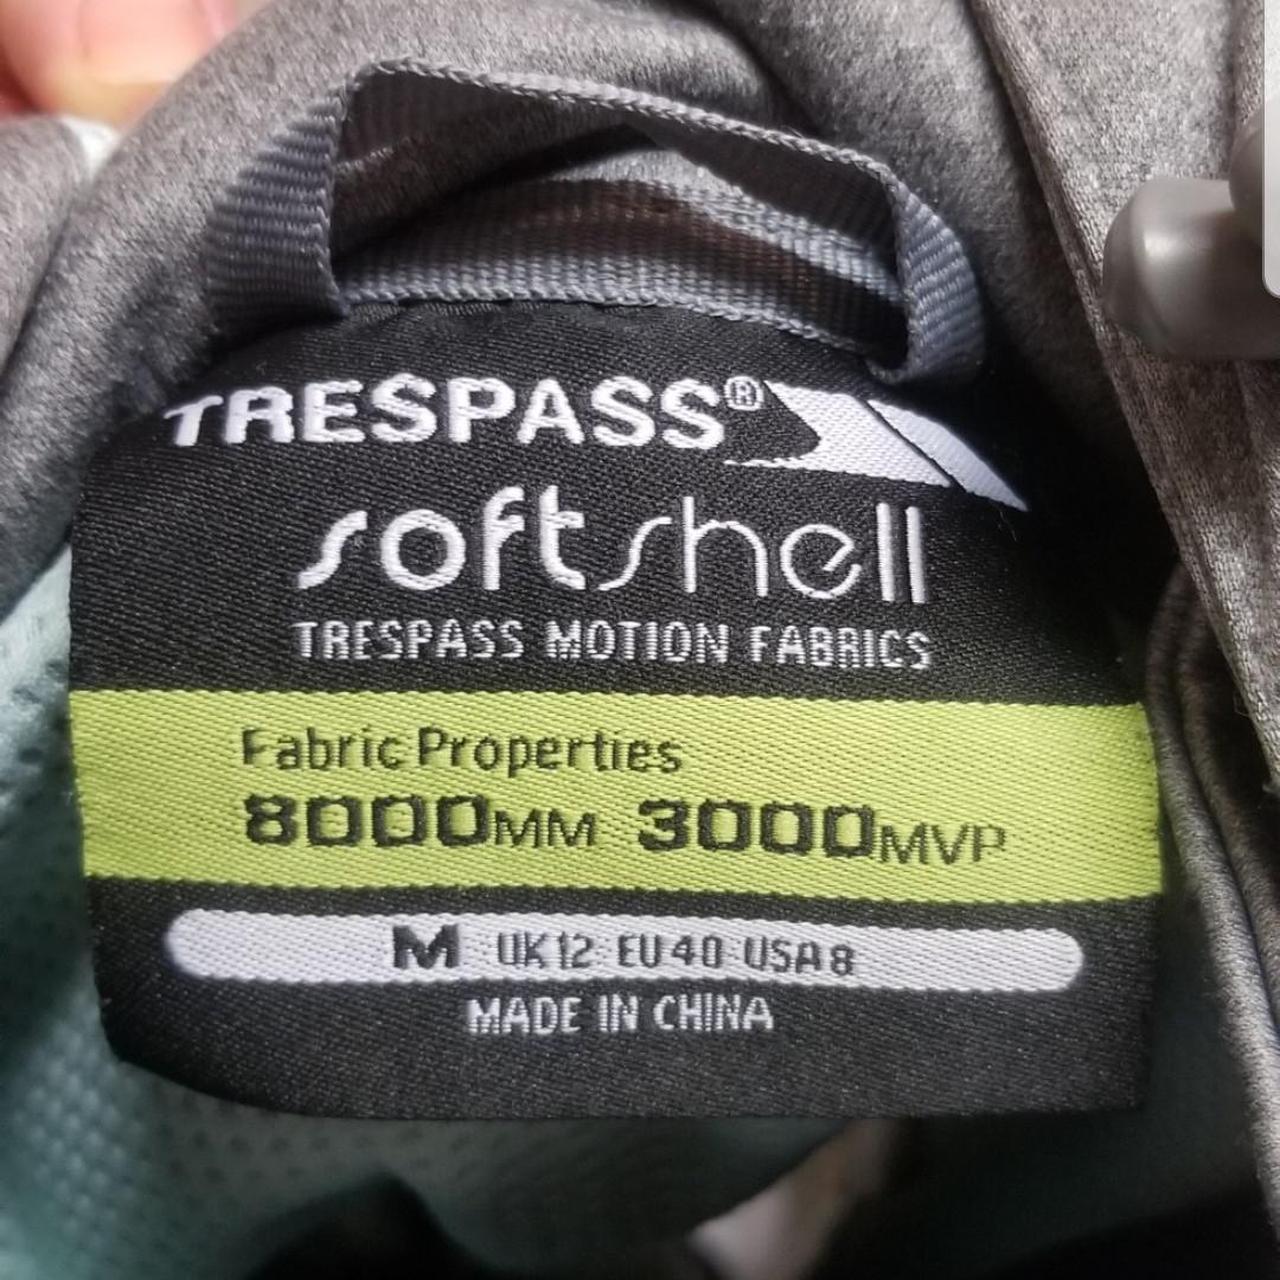 Product Image 3 - Trespass jacket.
Soft shell and good